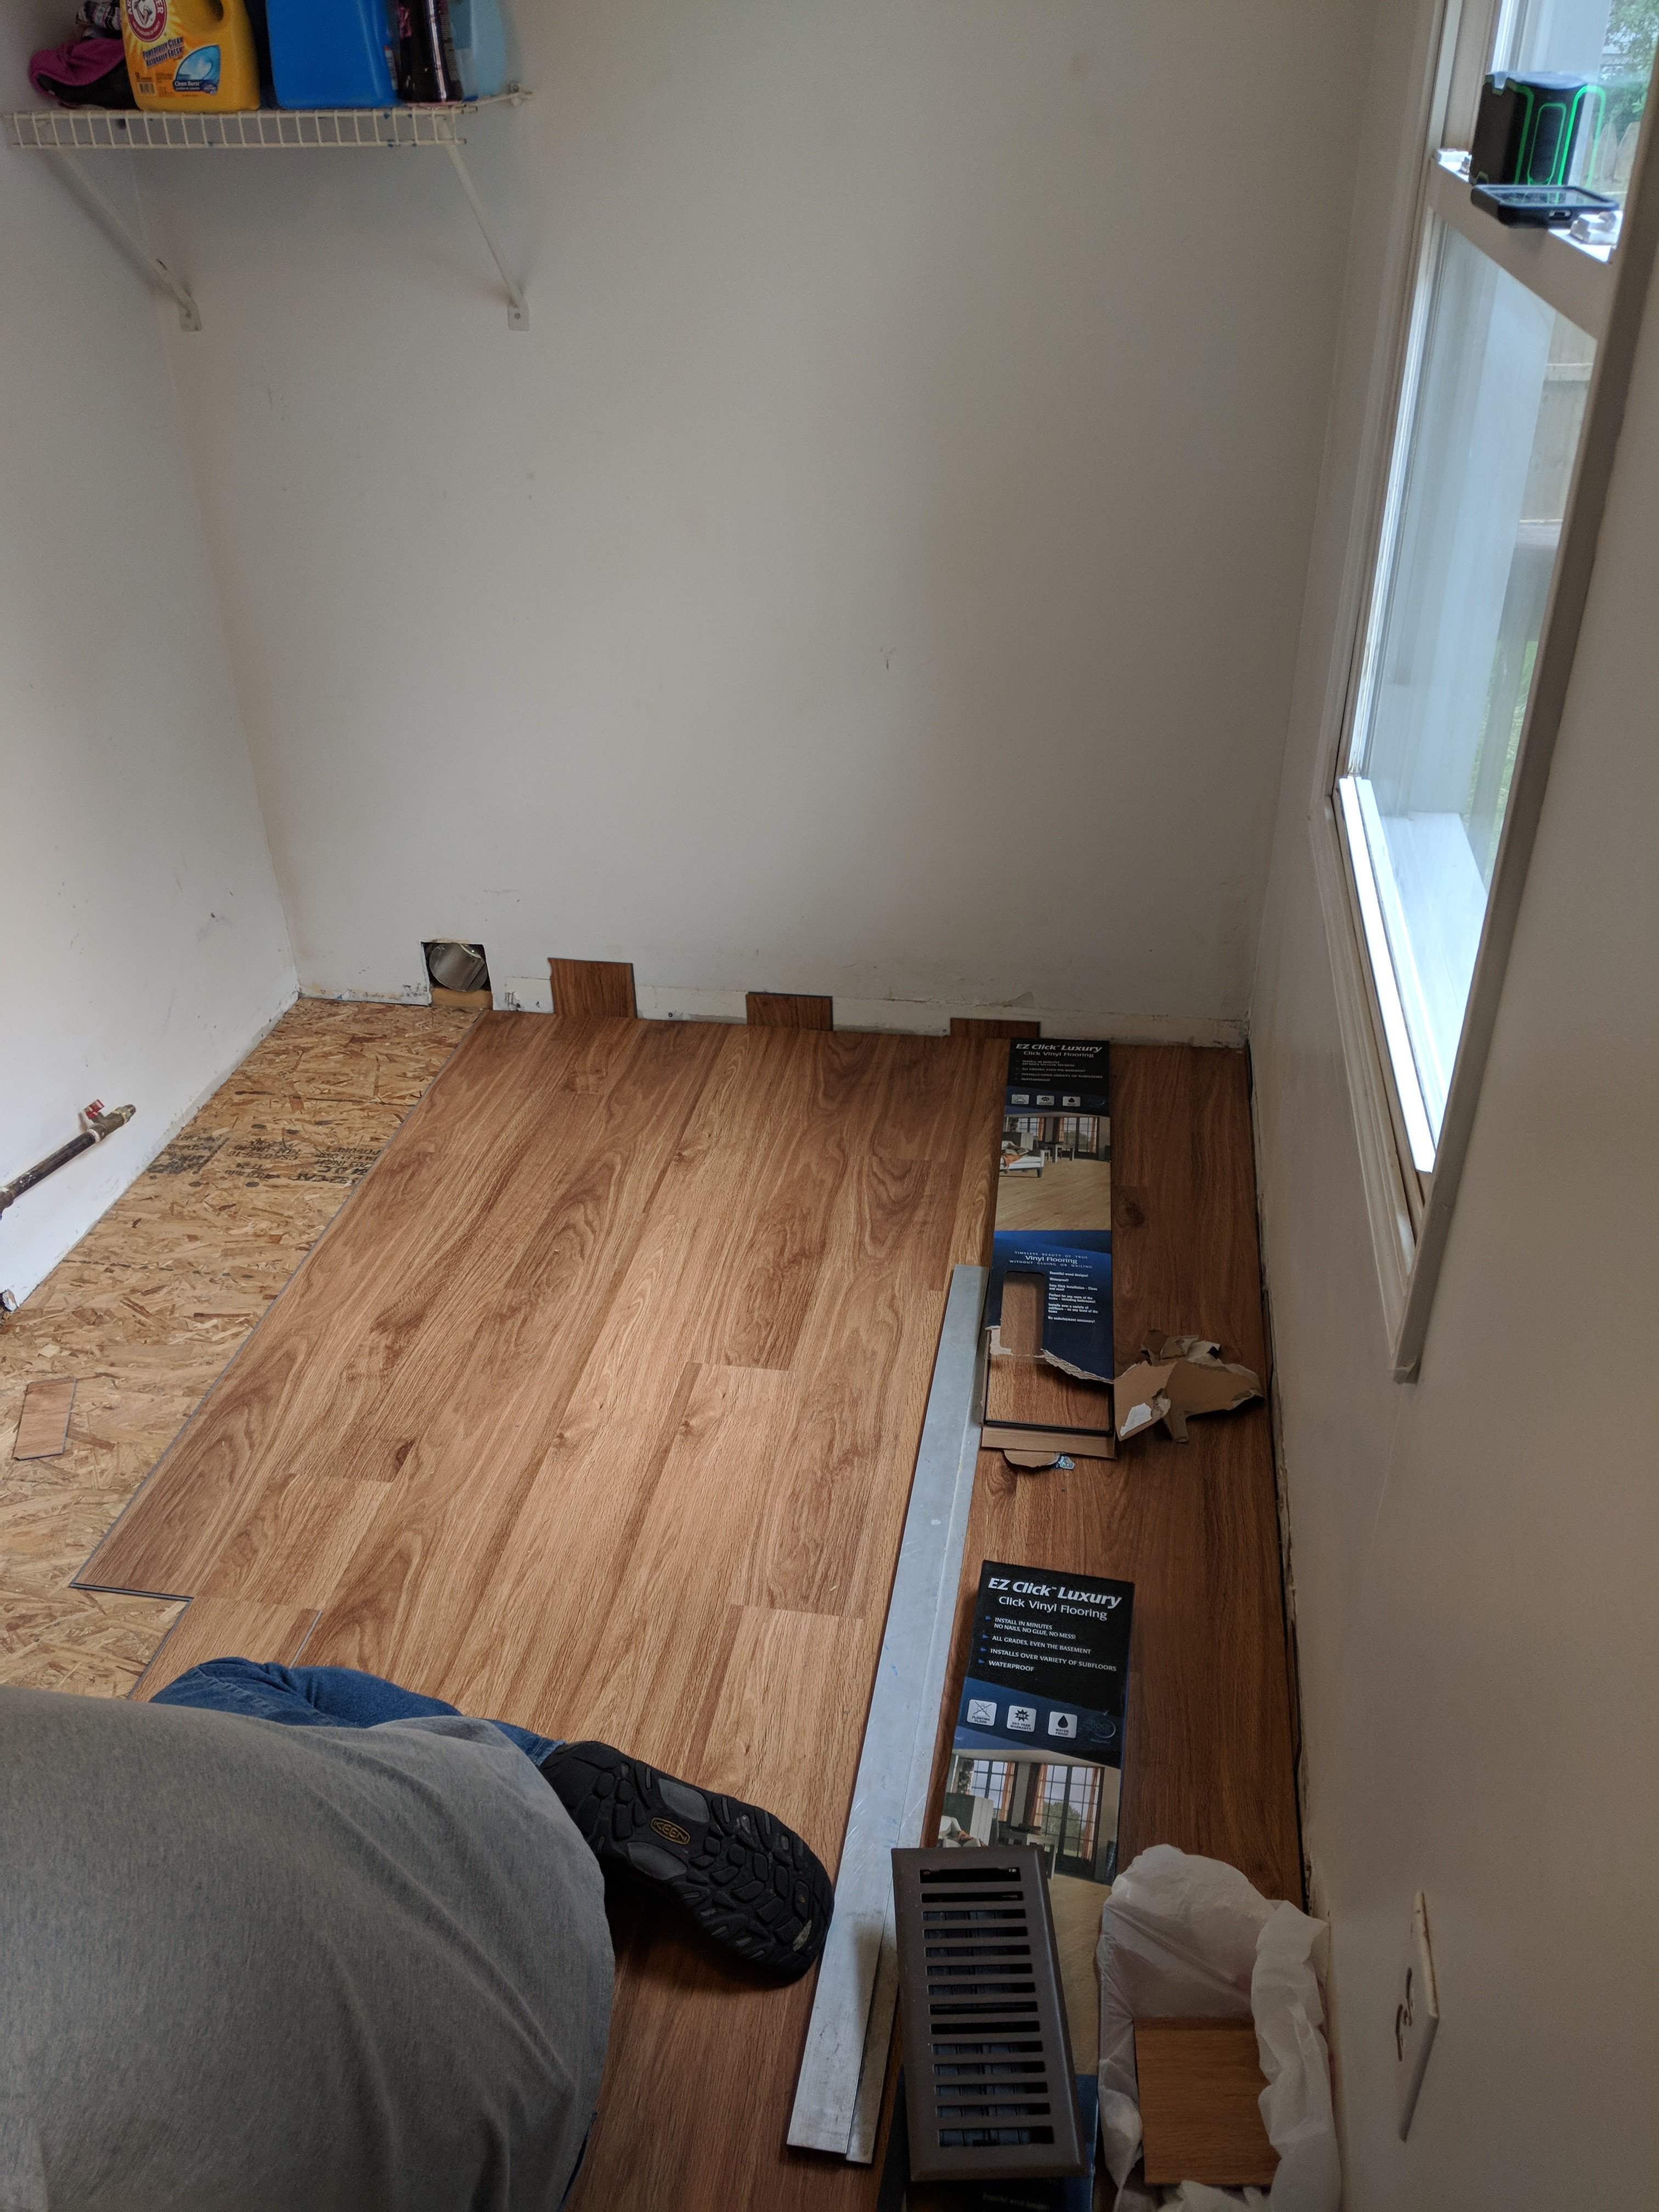 hardwood floor refinishing new haven ct of https imgur com gallery kokvx7q daily https imgur com kokvx7q within oe41xct